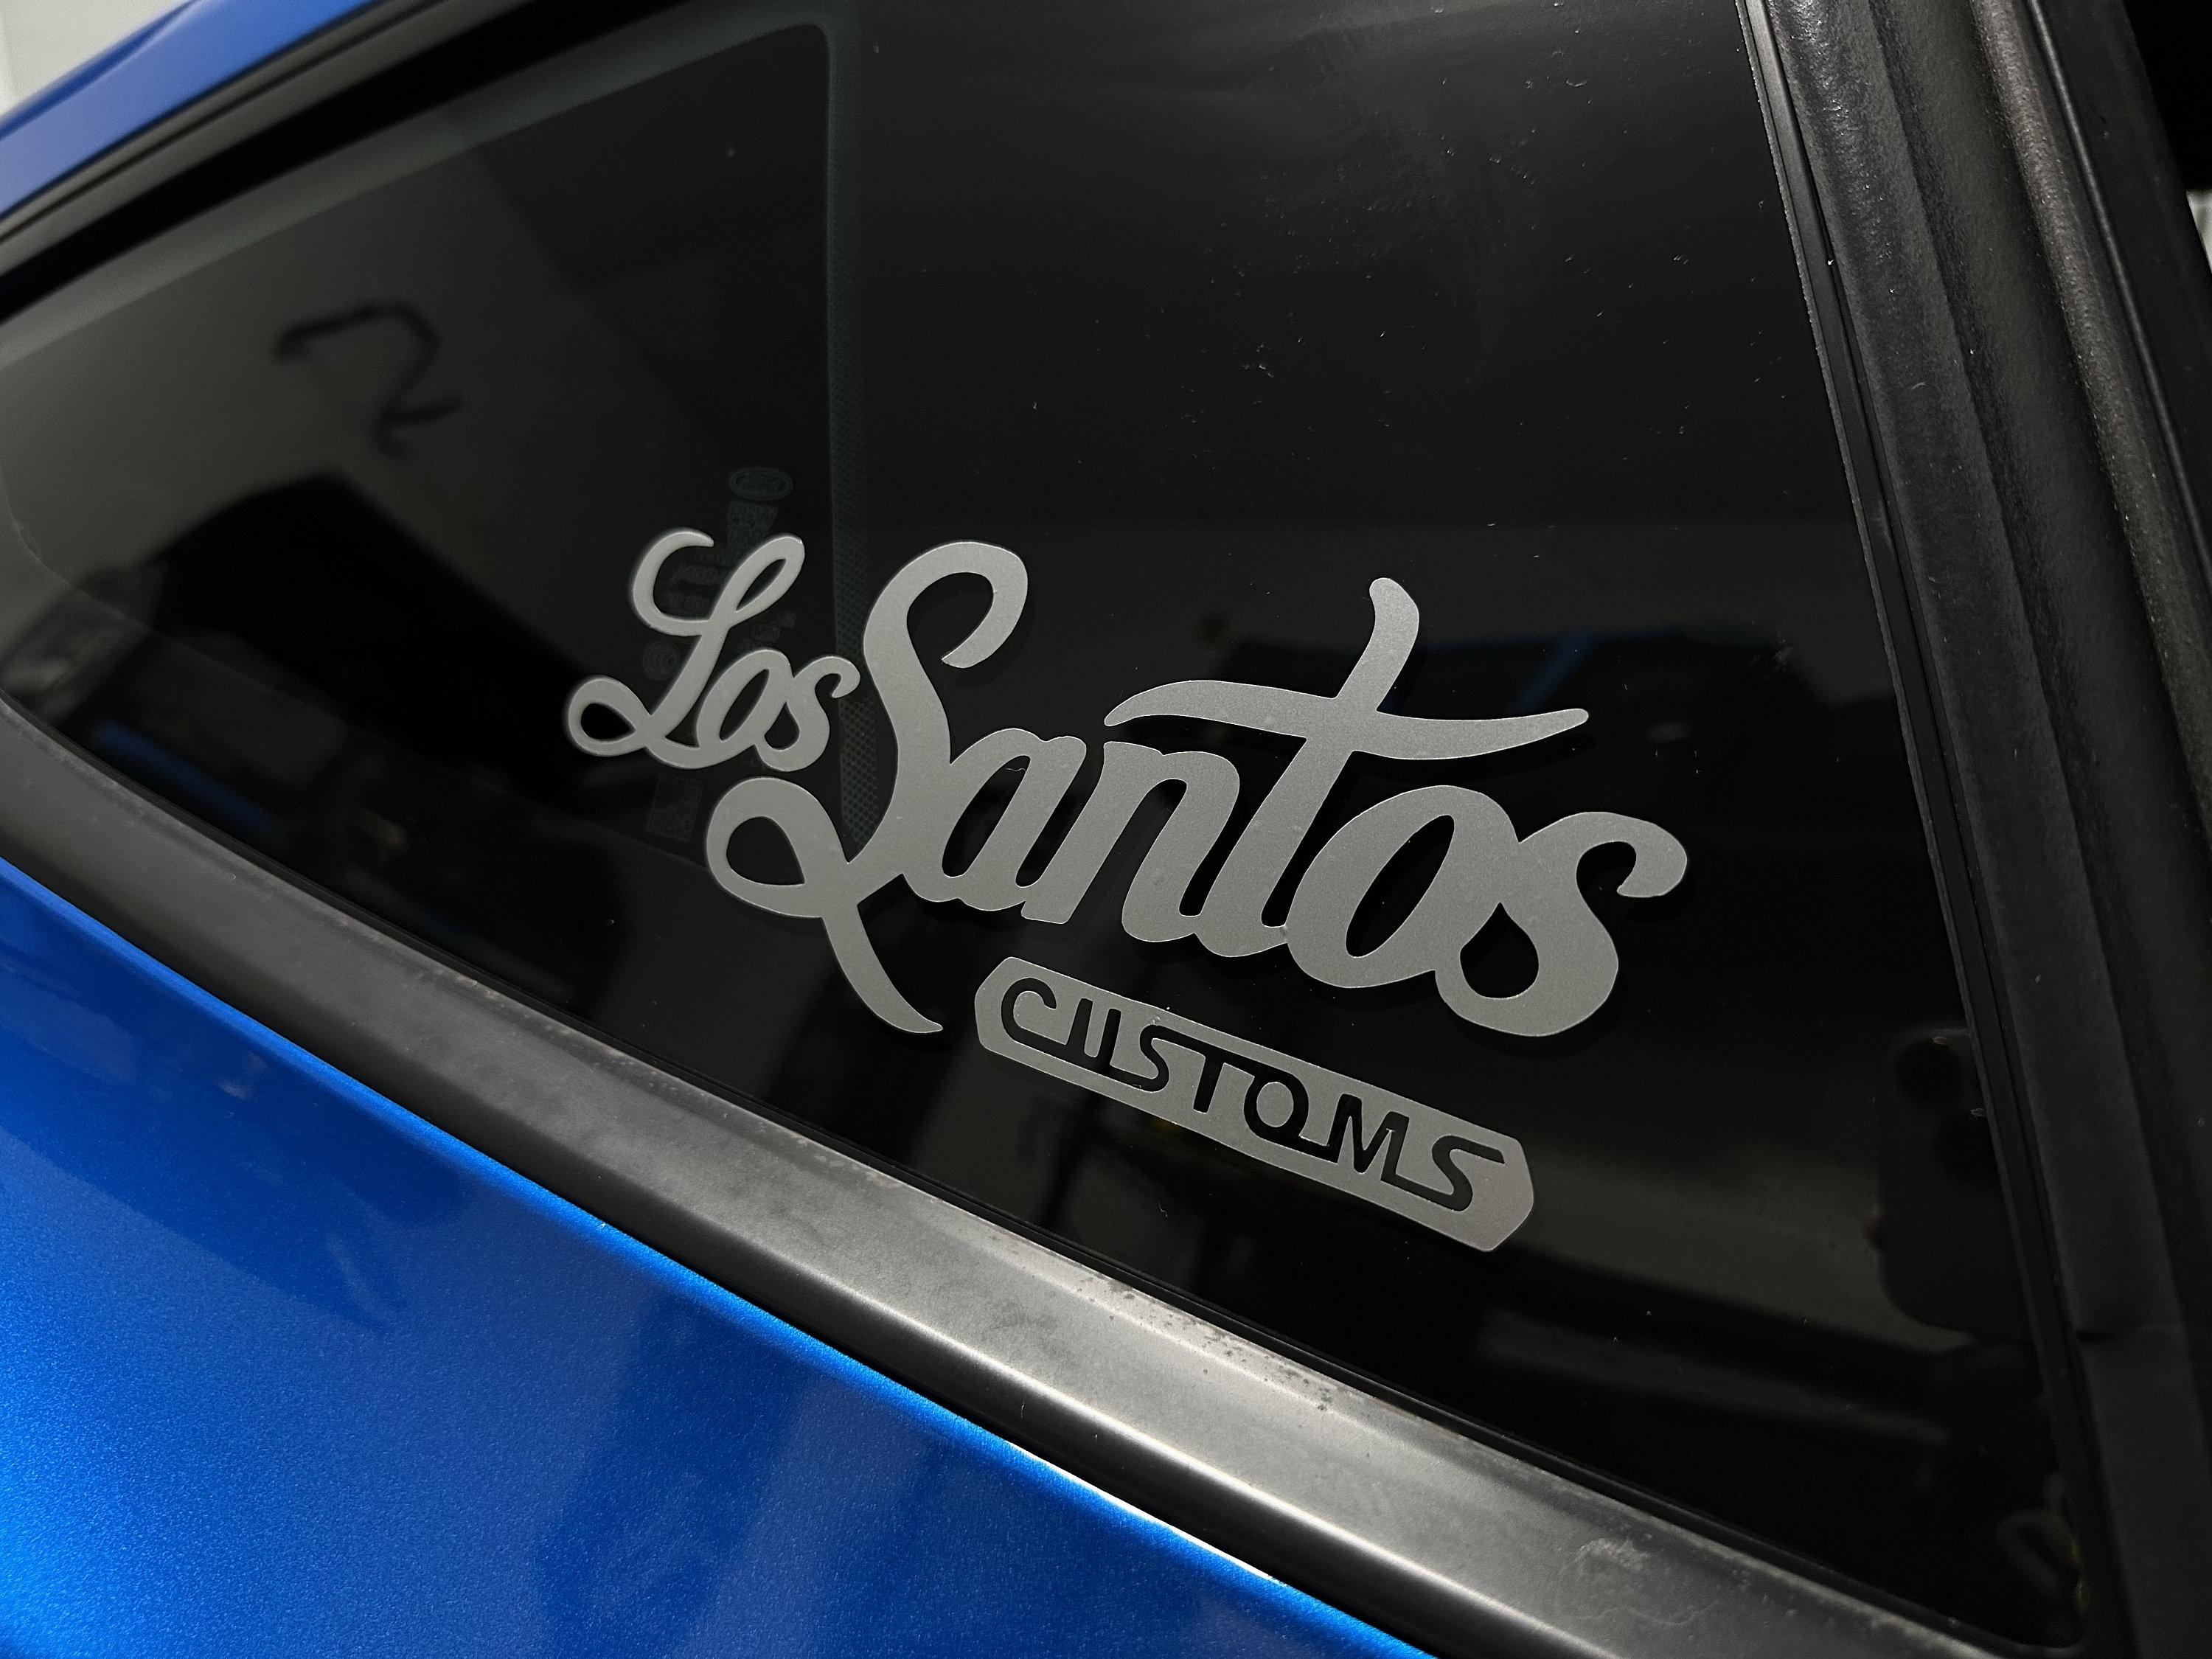 ArtStation - Los Santos Customs GTA 5